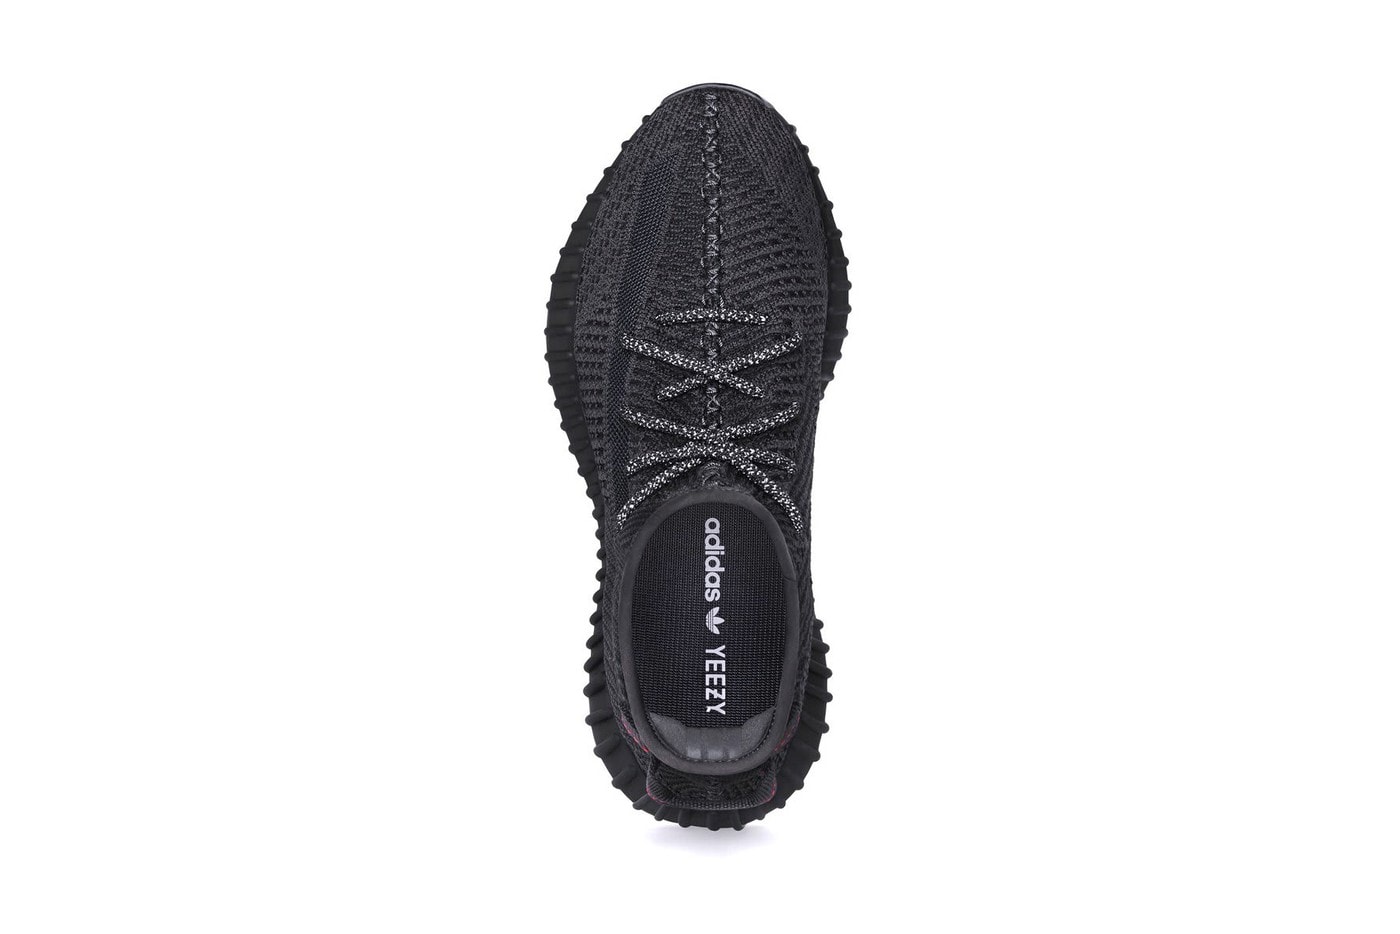 adidas Originals YEEZY BOOST 350 All-Black Release Date Minimal Kanye West Sneaker Shoe 